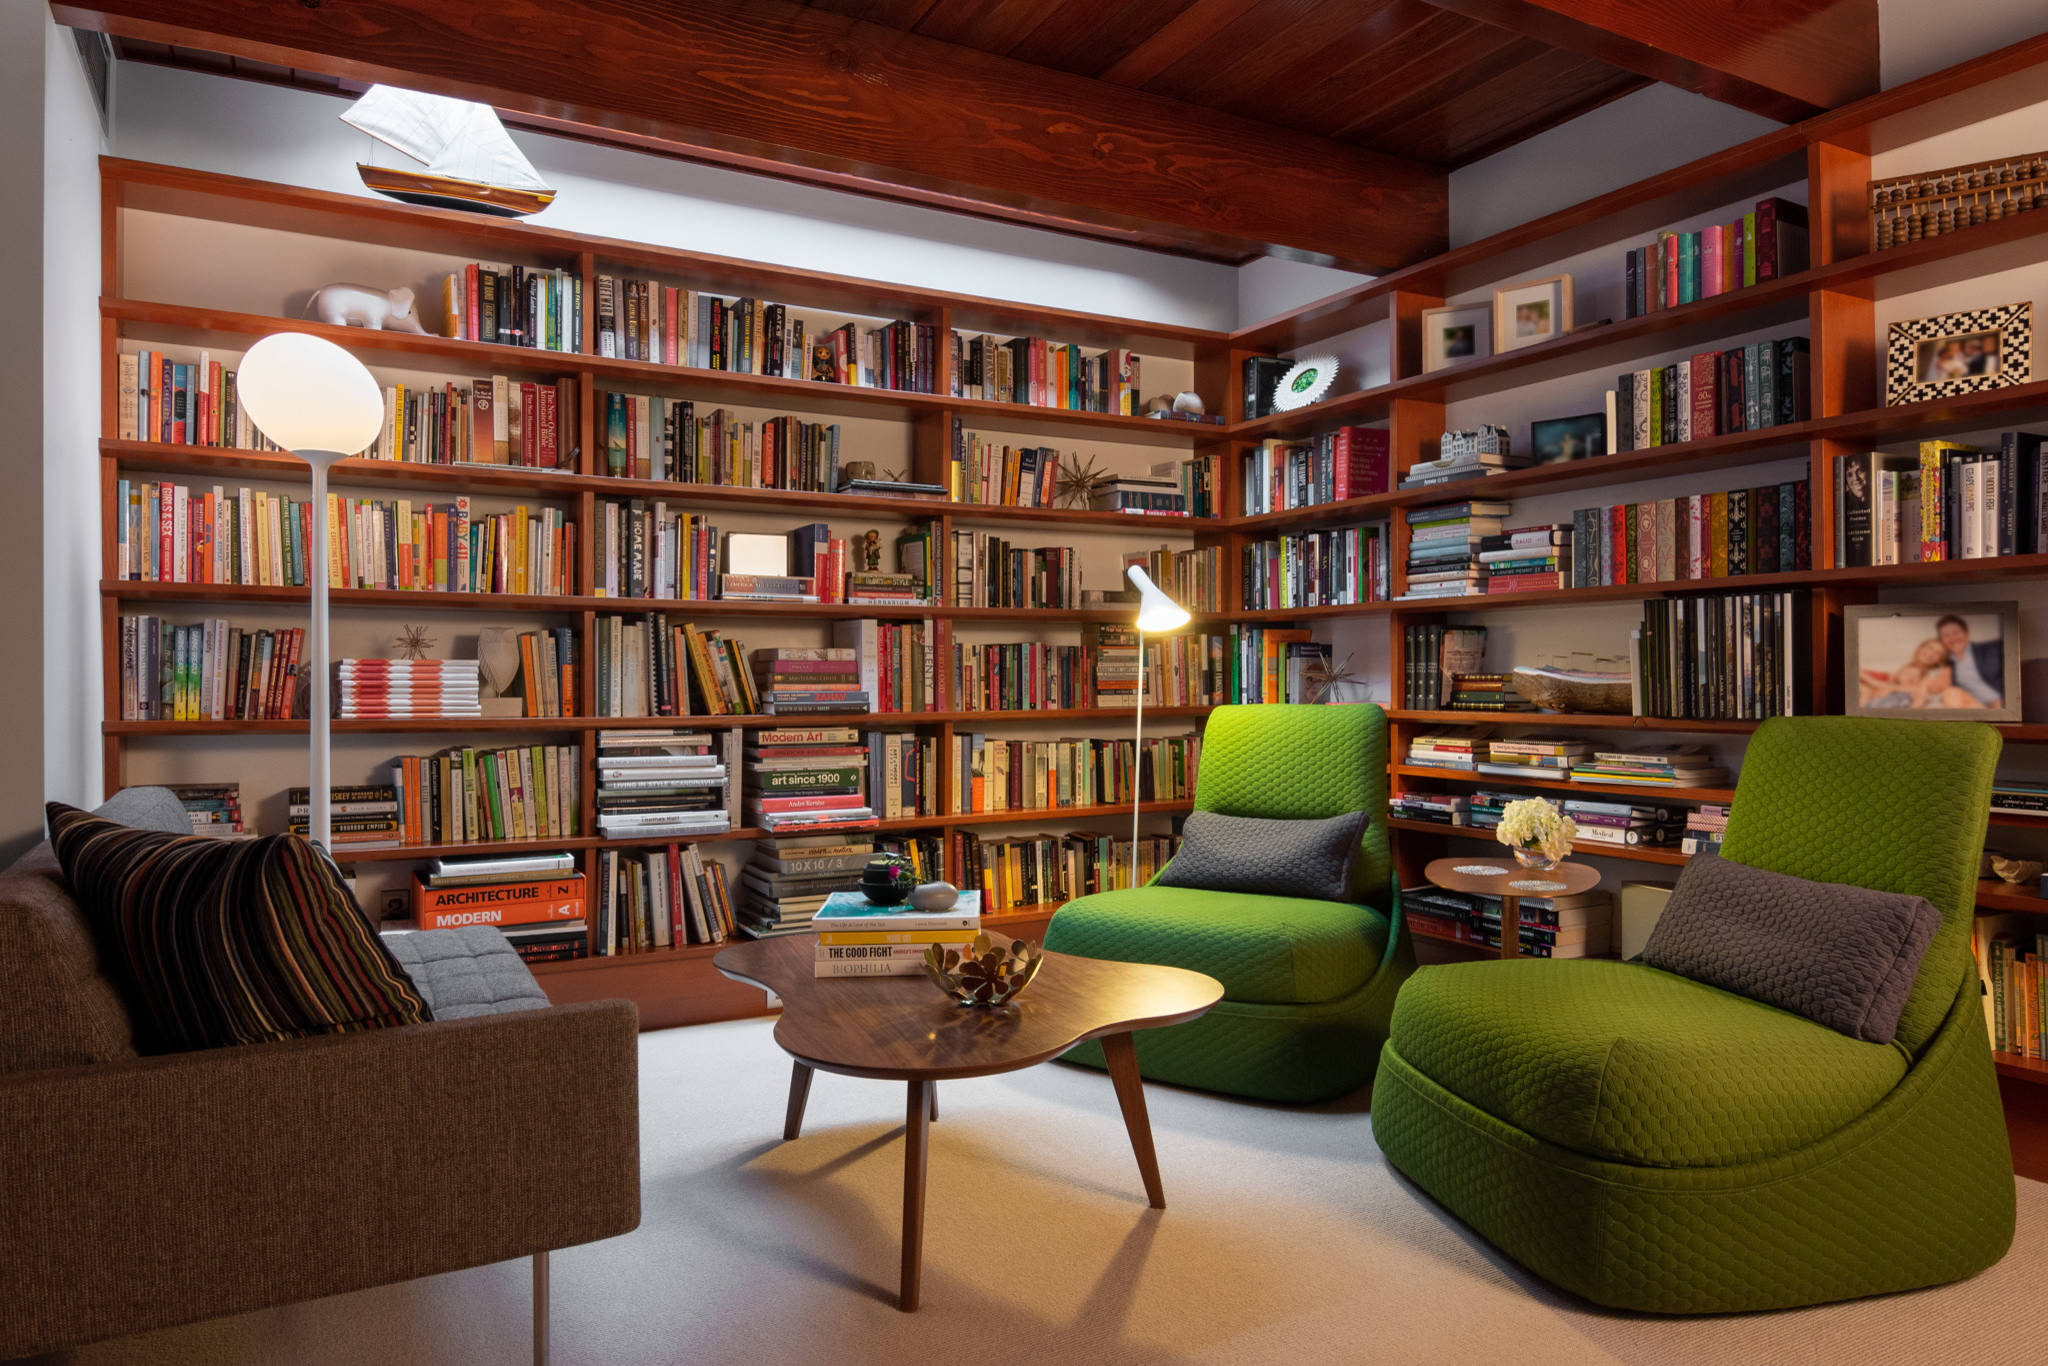 Built In Bookcase Midcentury - Photos & Ideas | Houzz